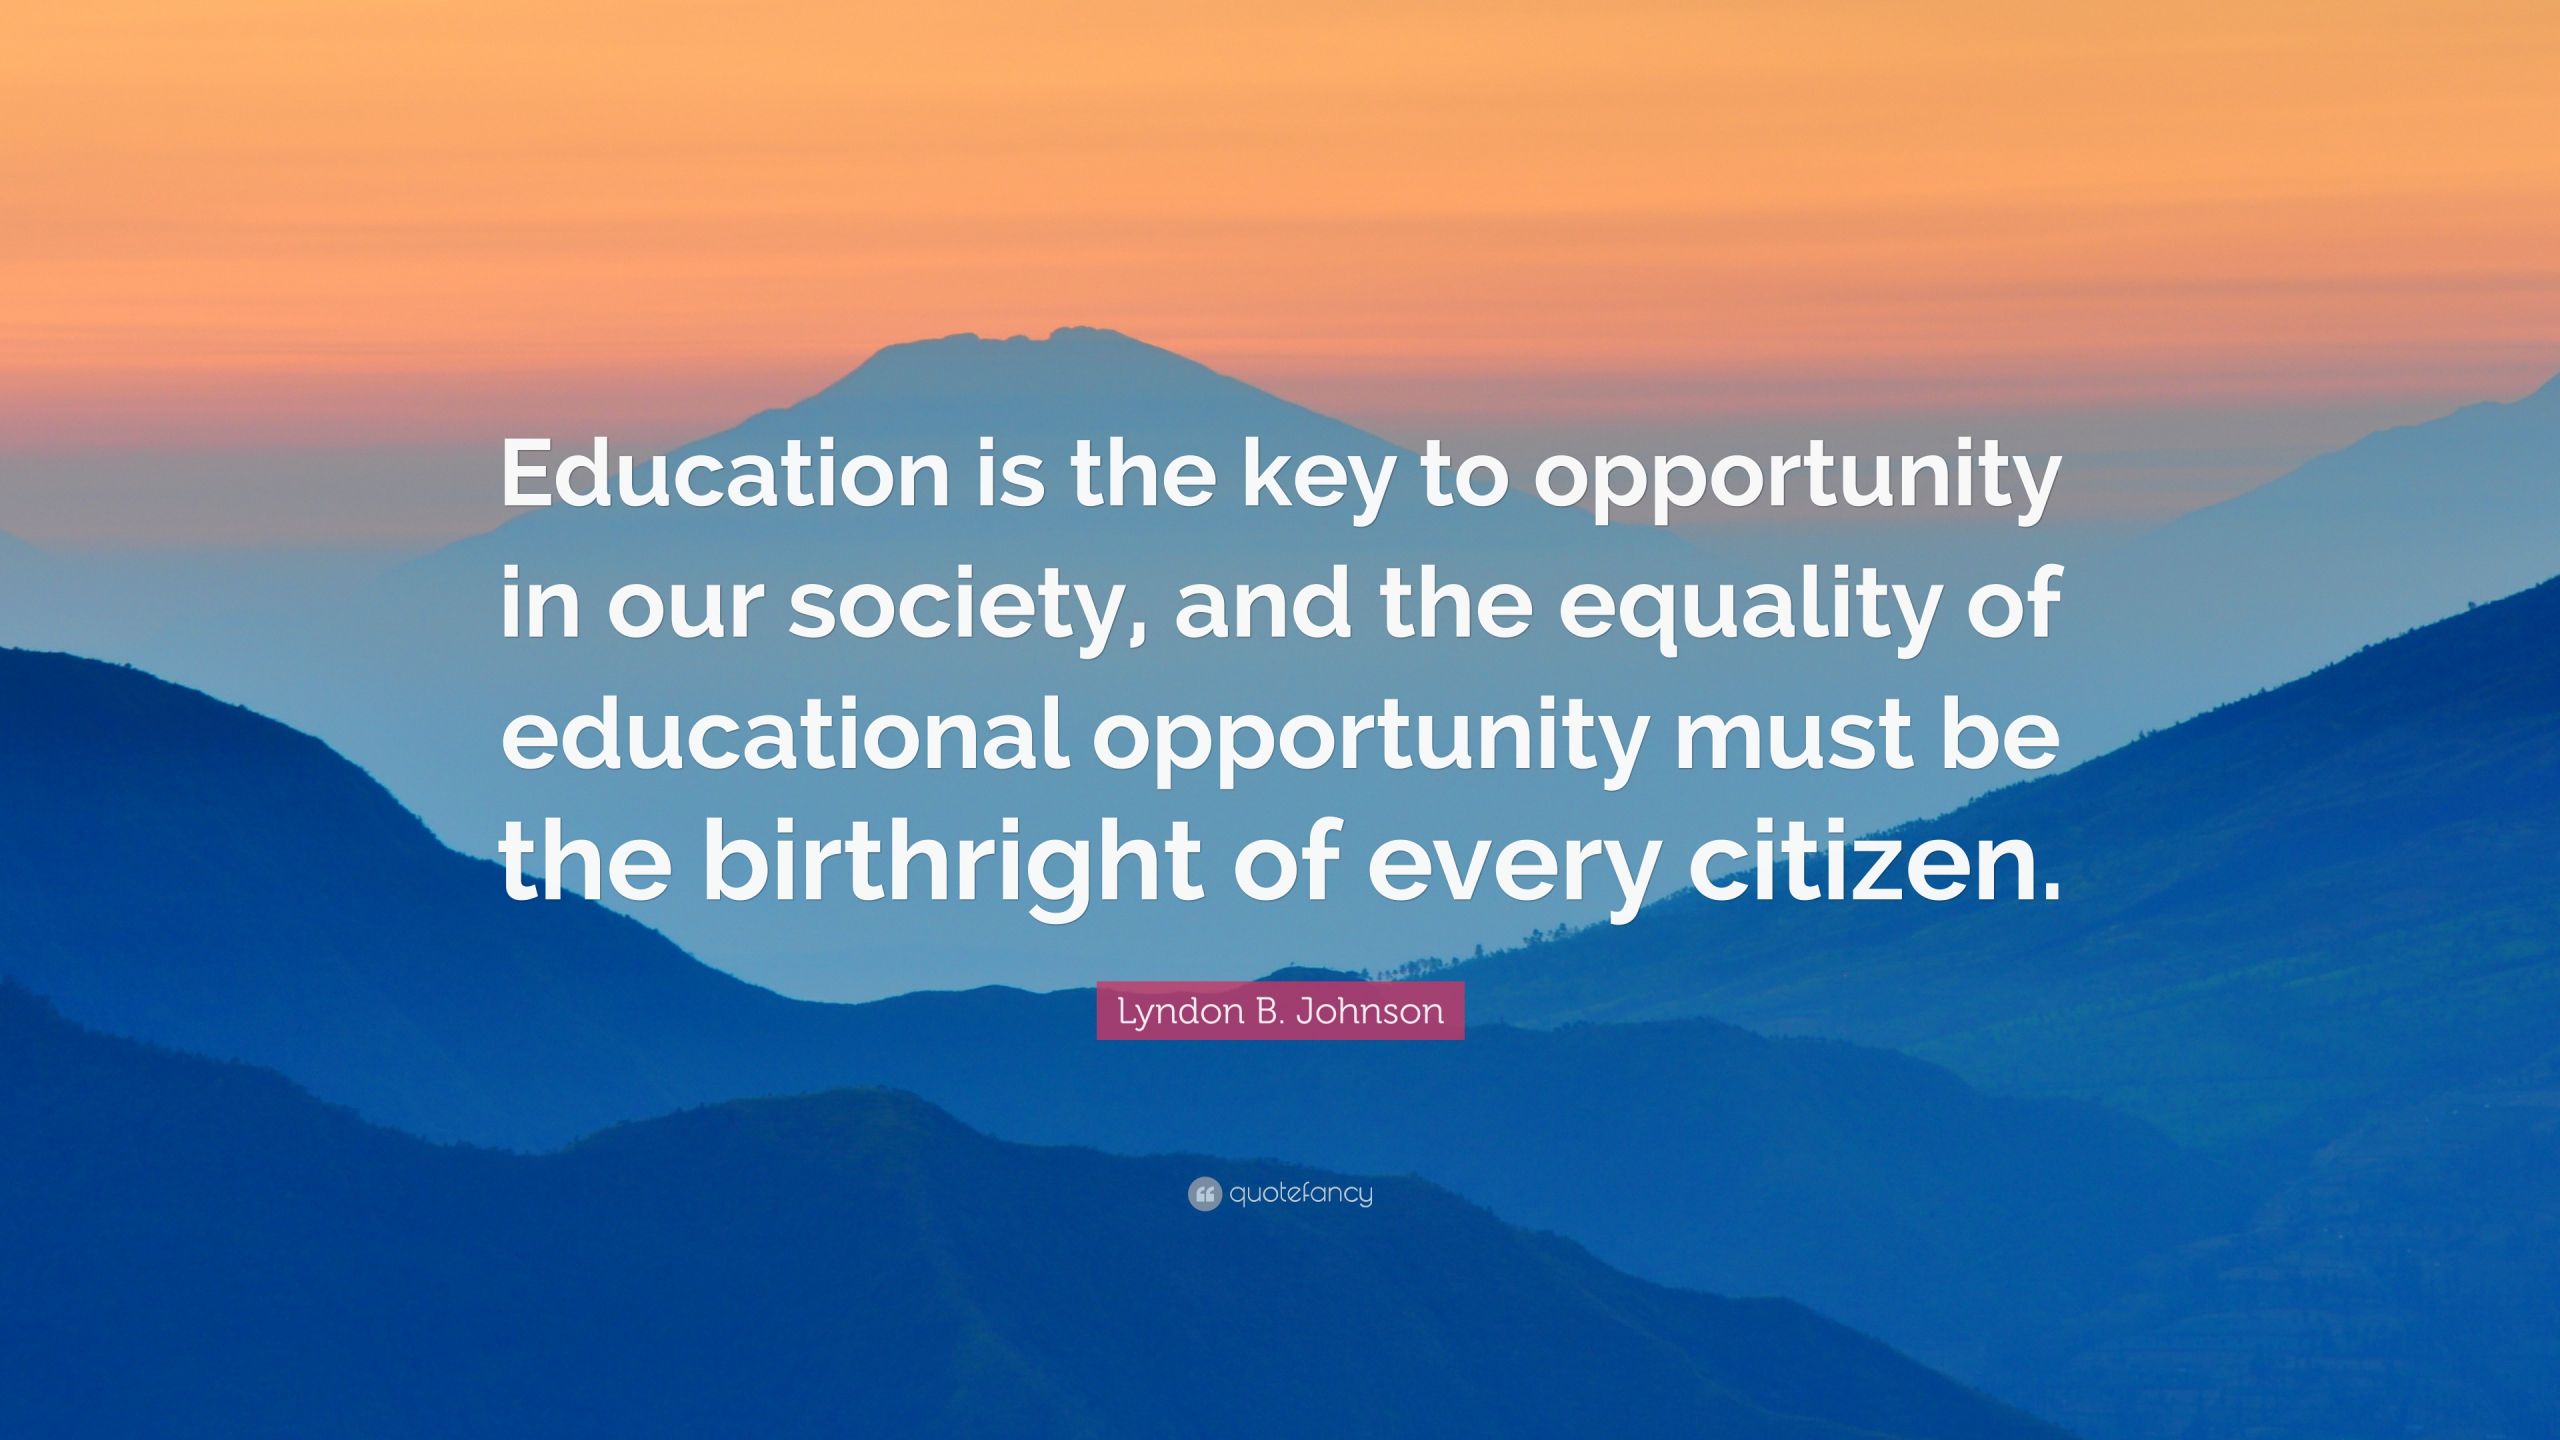 Education Is The Key Quote
 Lyndon B Johnson Quote “Education is the key to